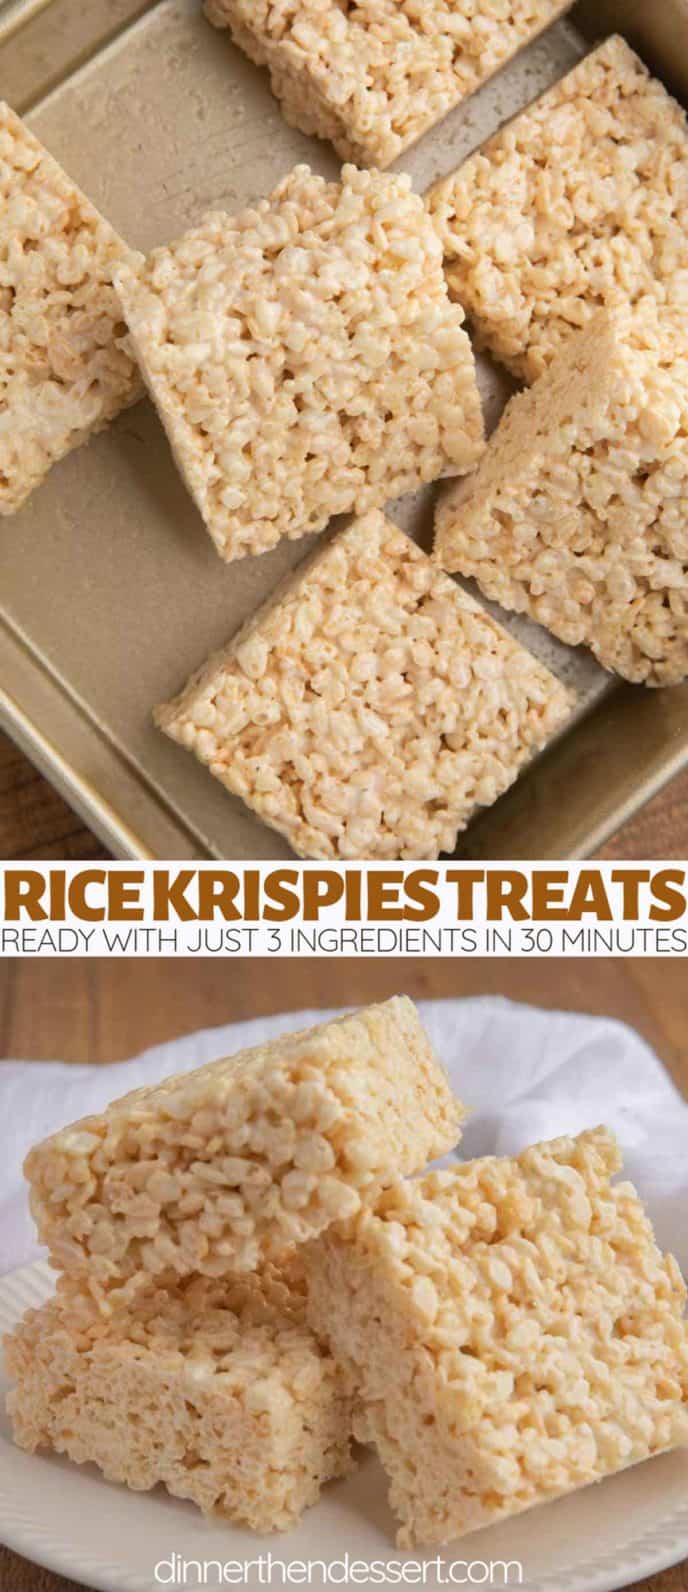 Rice Krispies Treats in a pan